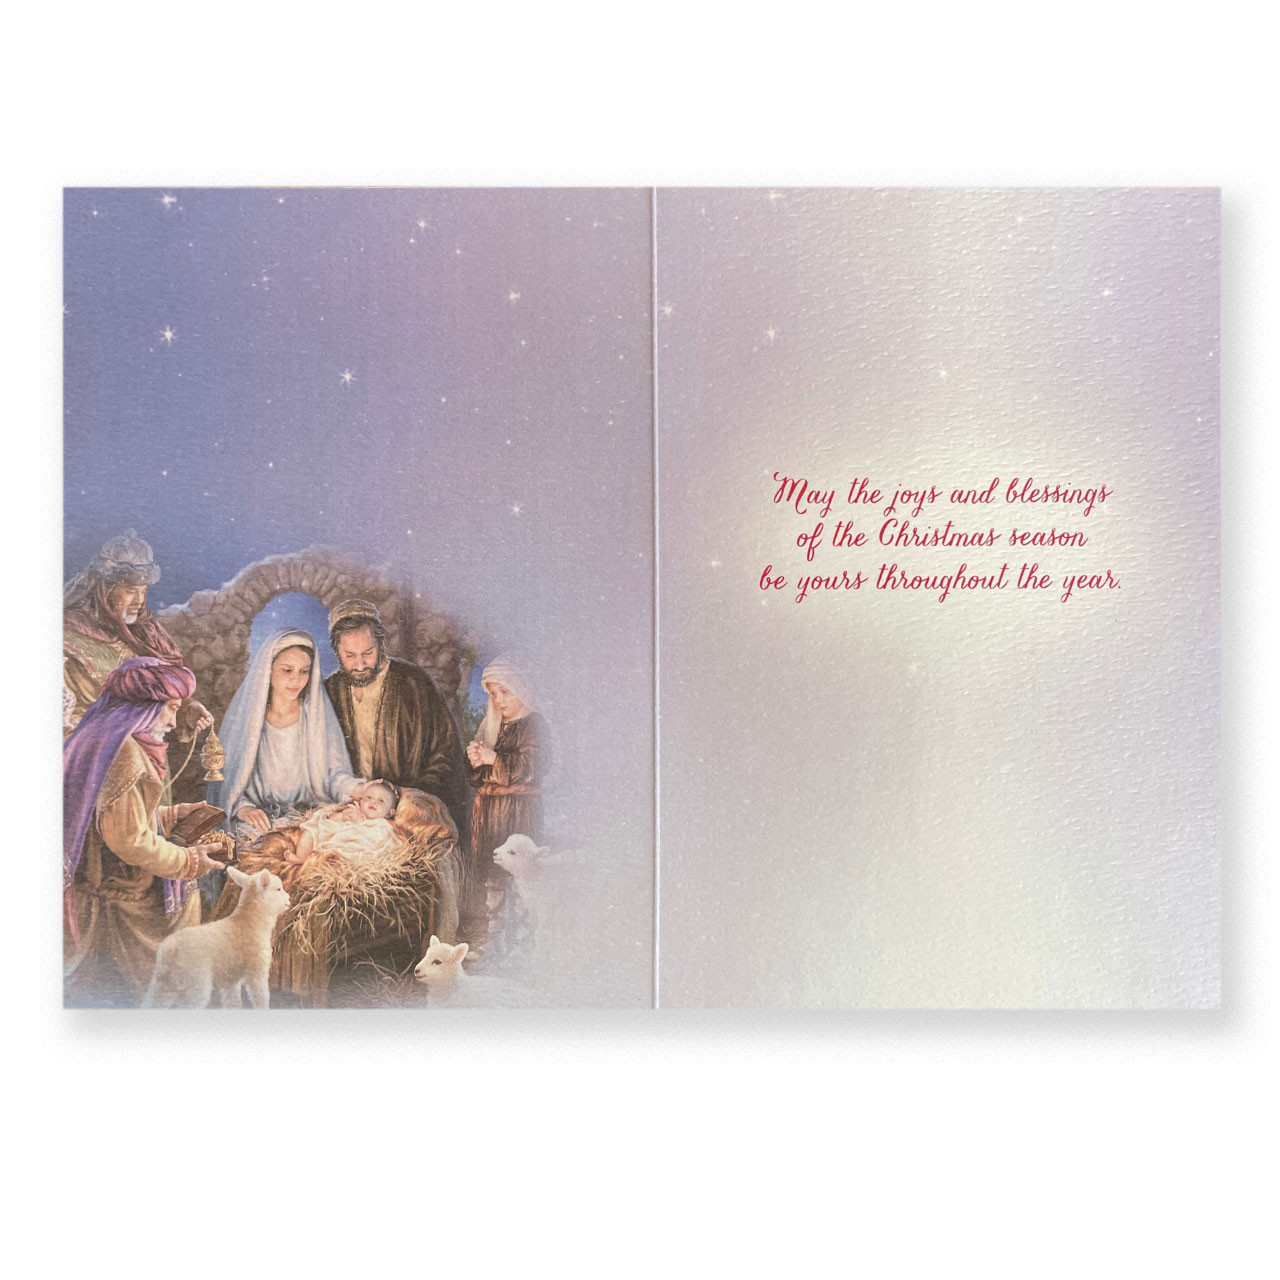 Inside the Single Christmas Blessings Card